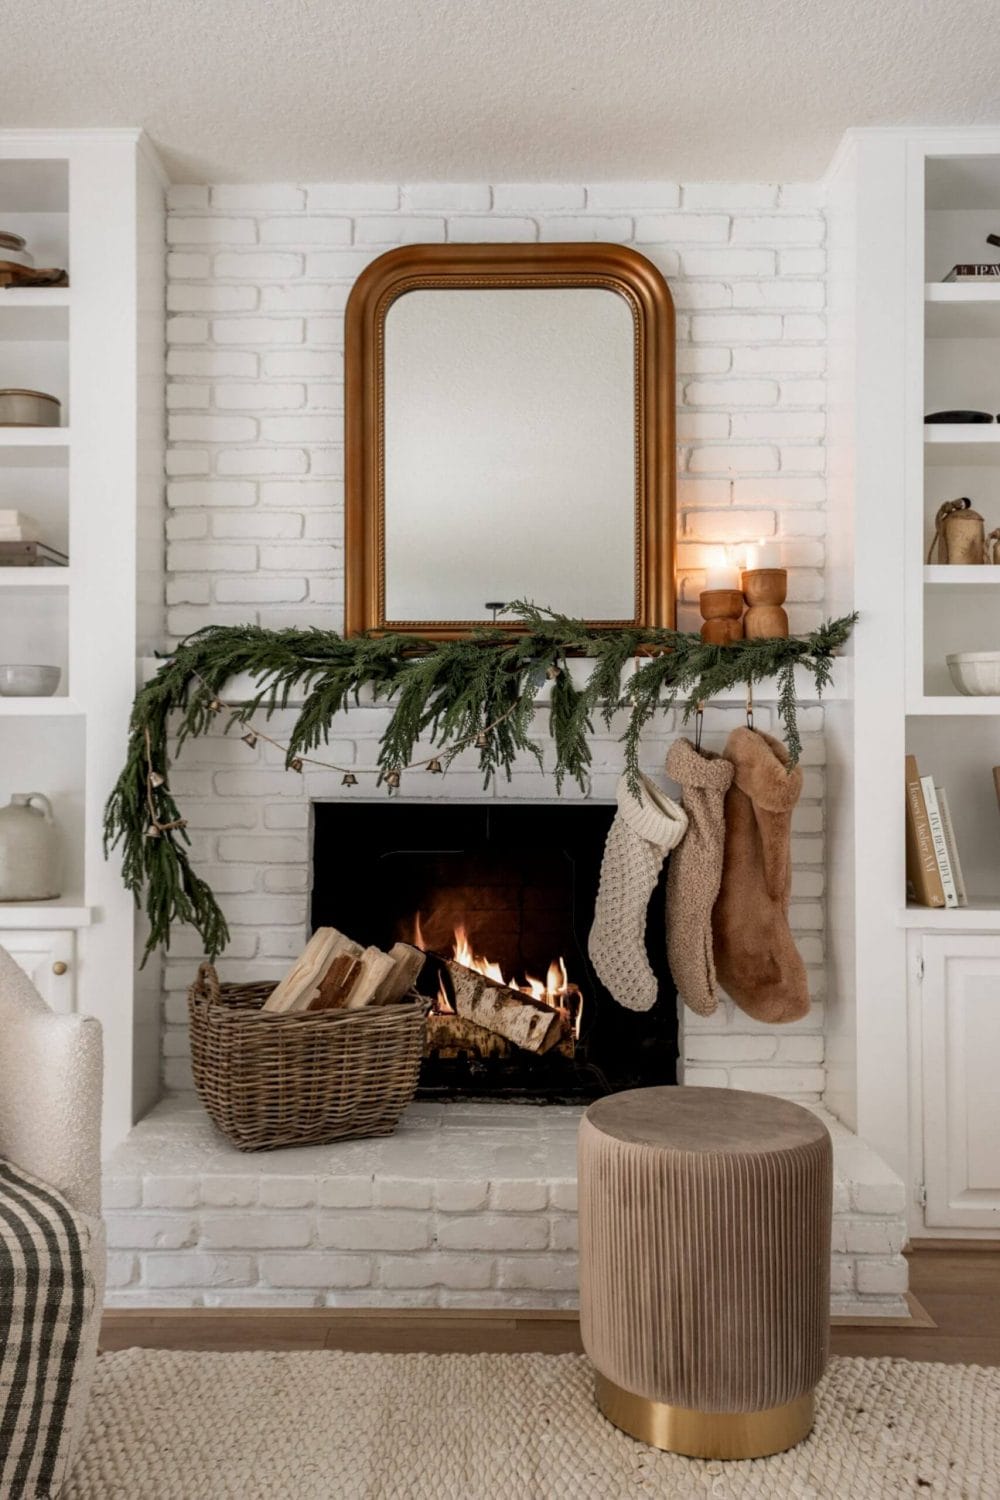 Fireplace Christmas decor